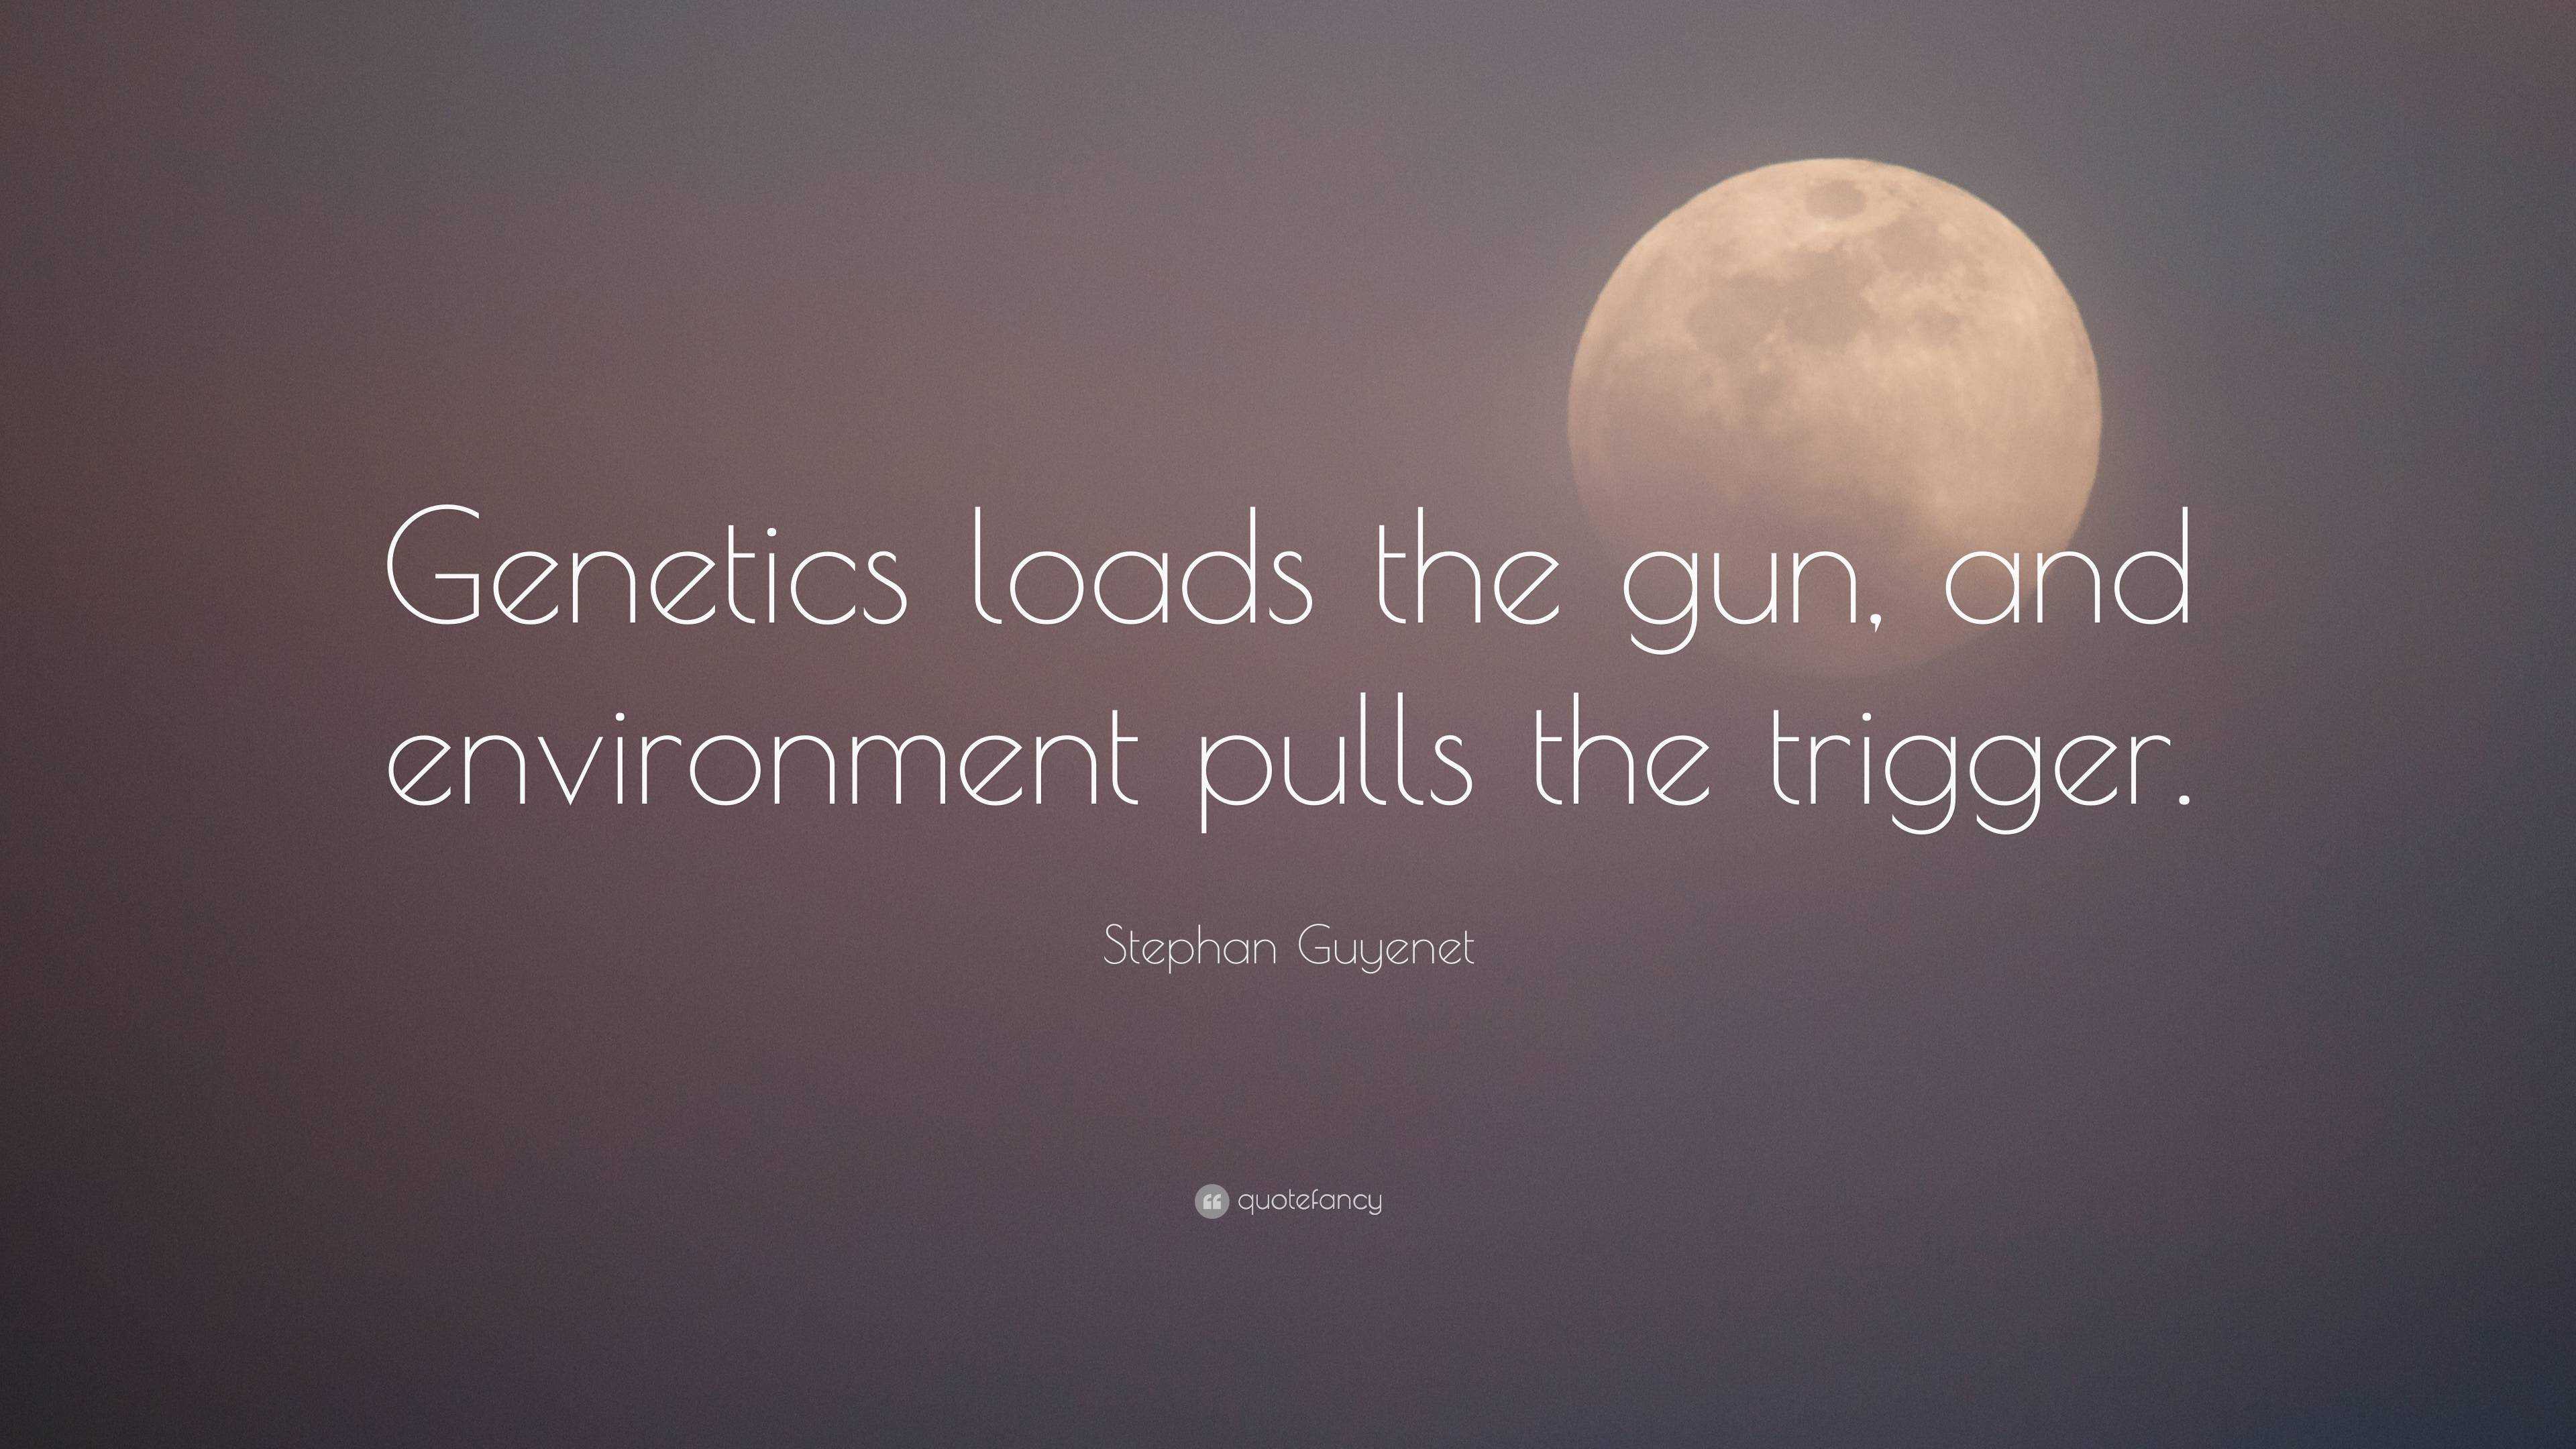 Stephan Guyenet Quote: “Genetics loads the gun, and environment pulls